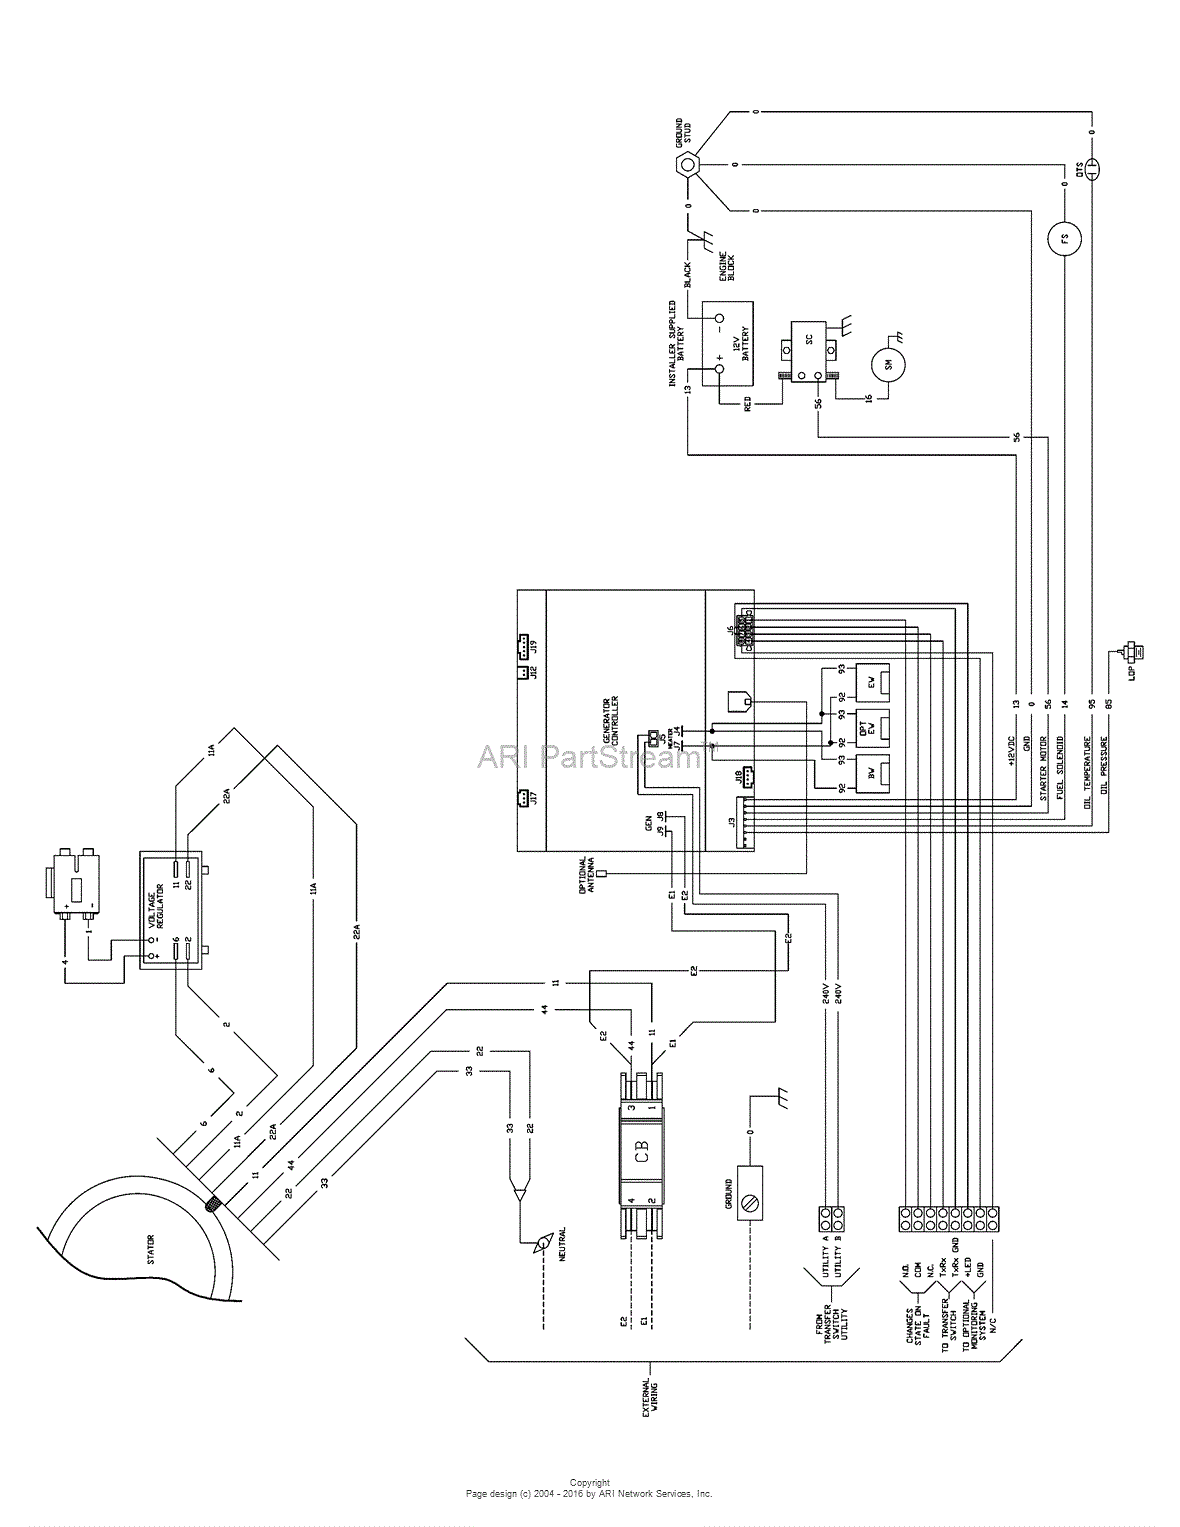 Wiring Diagram For Emergency Generator